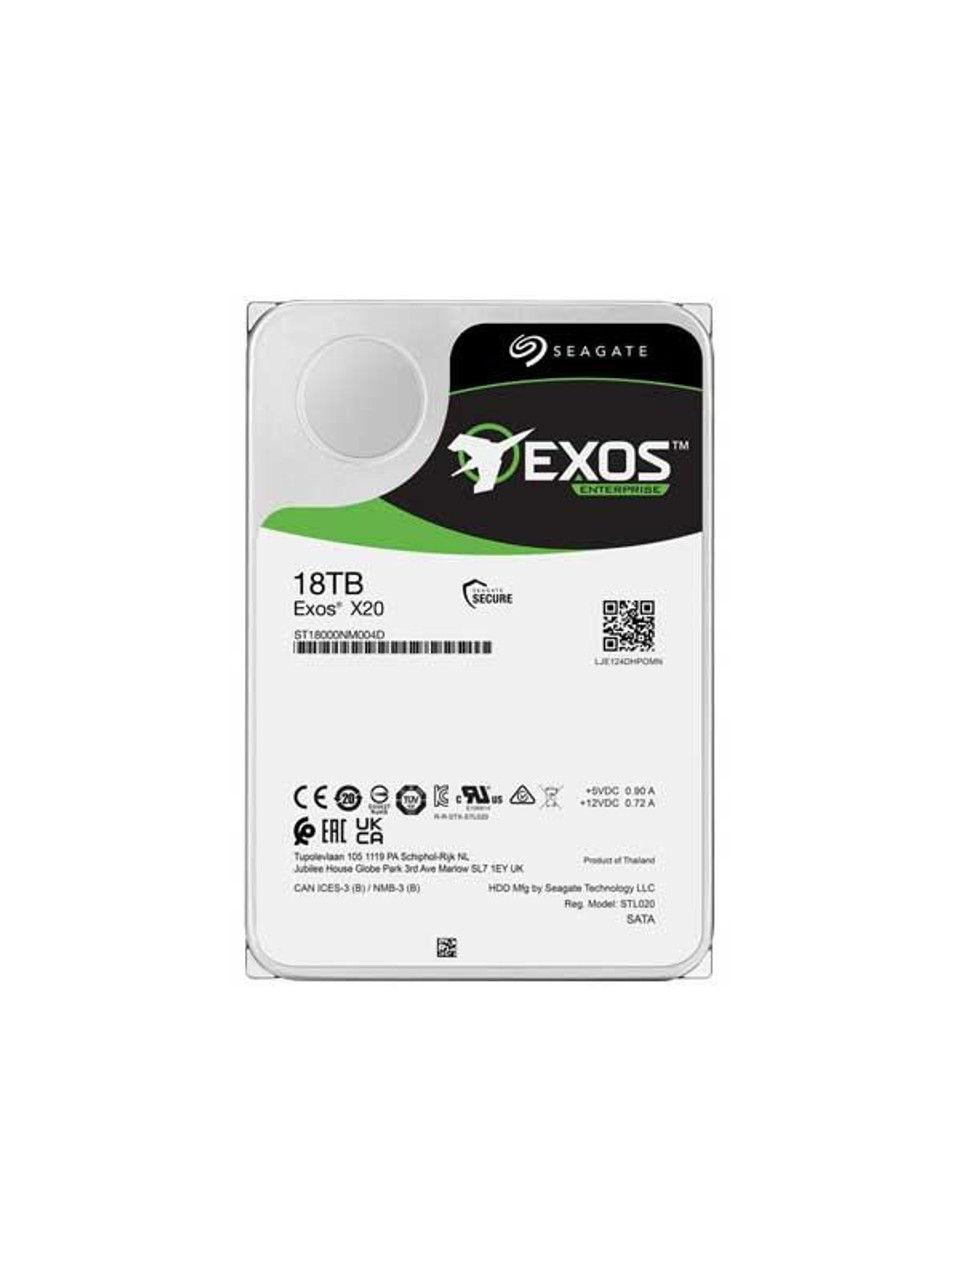 Seagate Enterprise Exos X20 18TB 7200RPM SAS 12Gbps 256MB Cache (SED / 512e 4Kn) 3.5-inch Internal Hard Drive